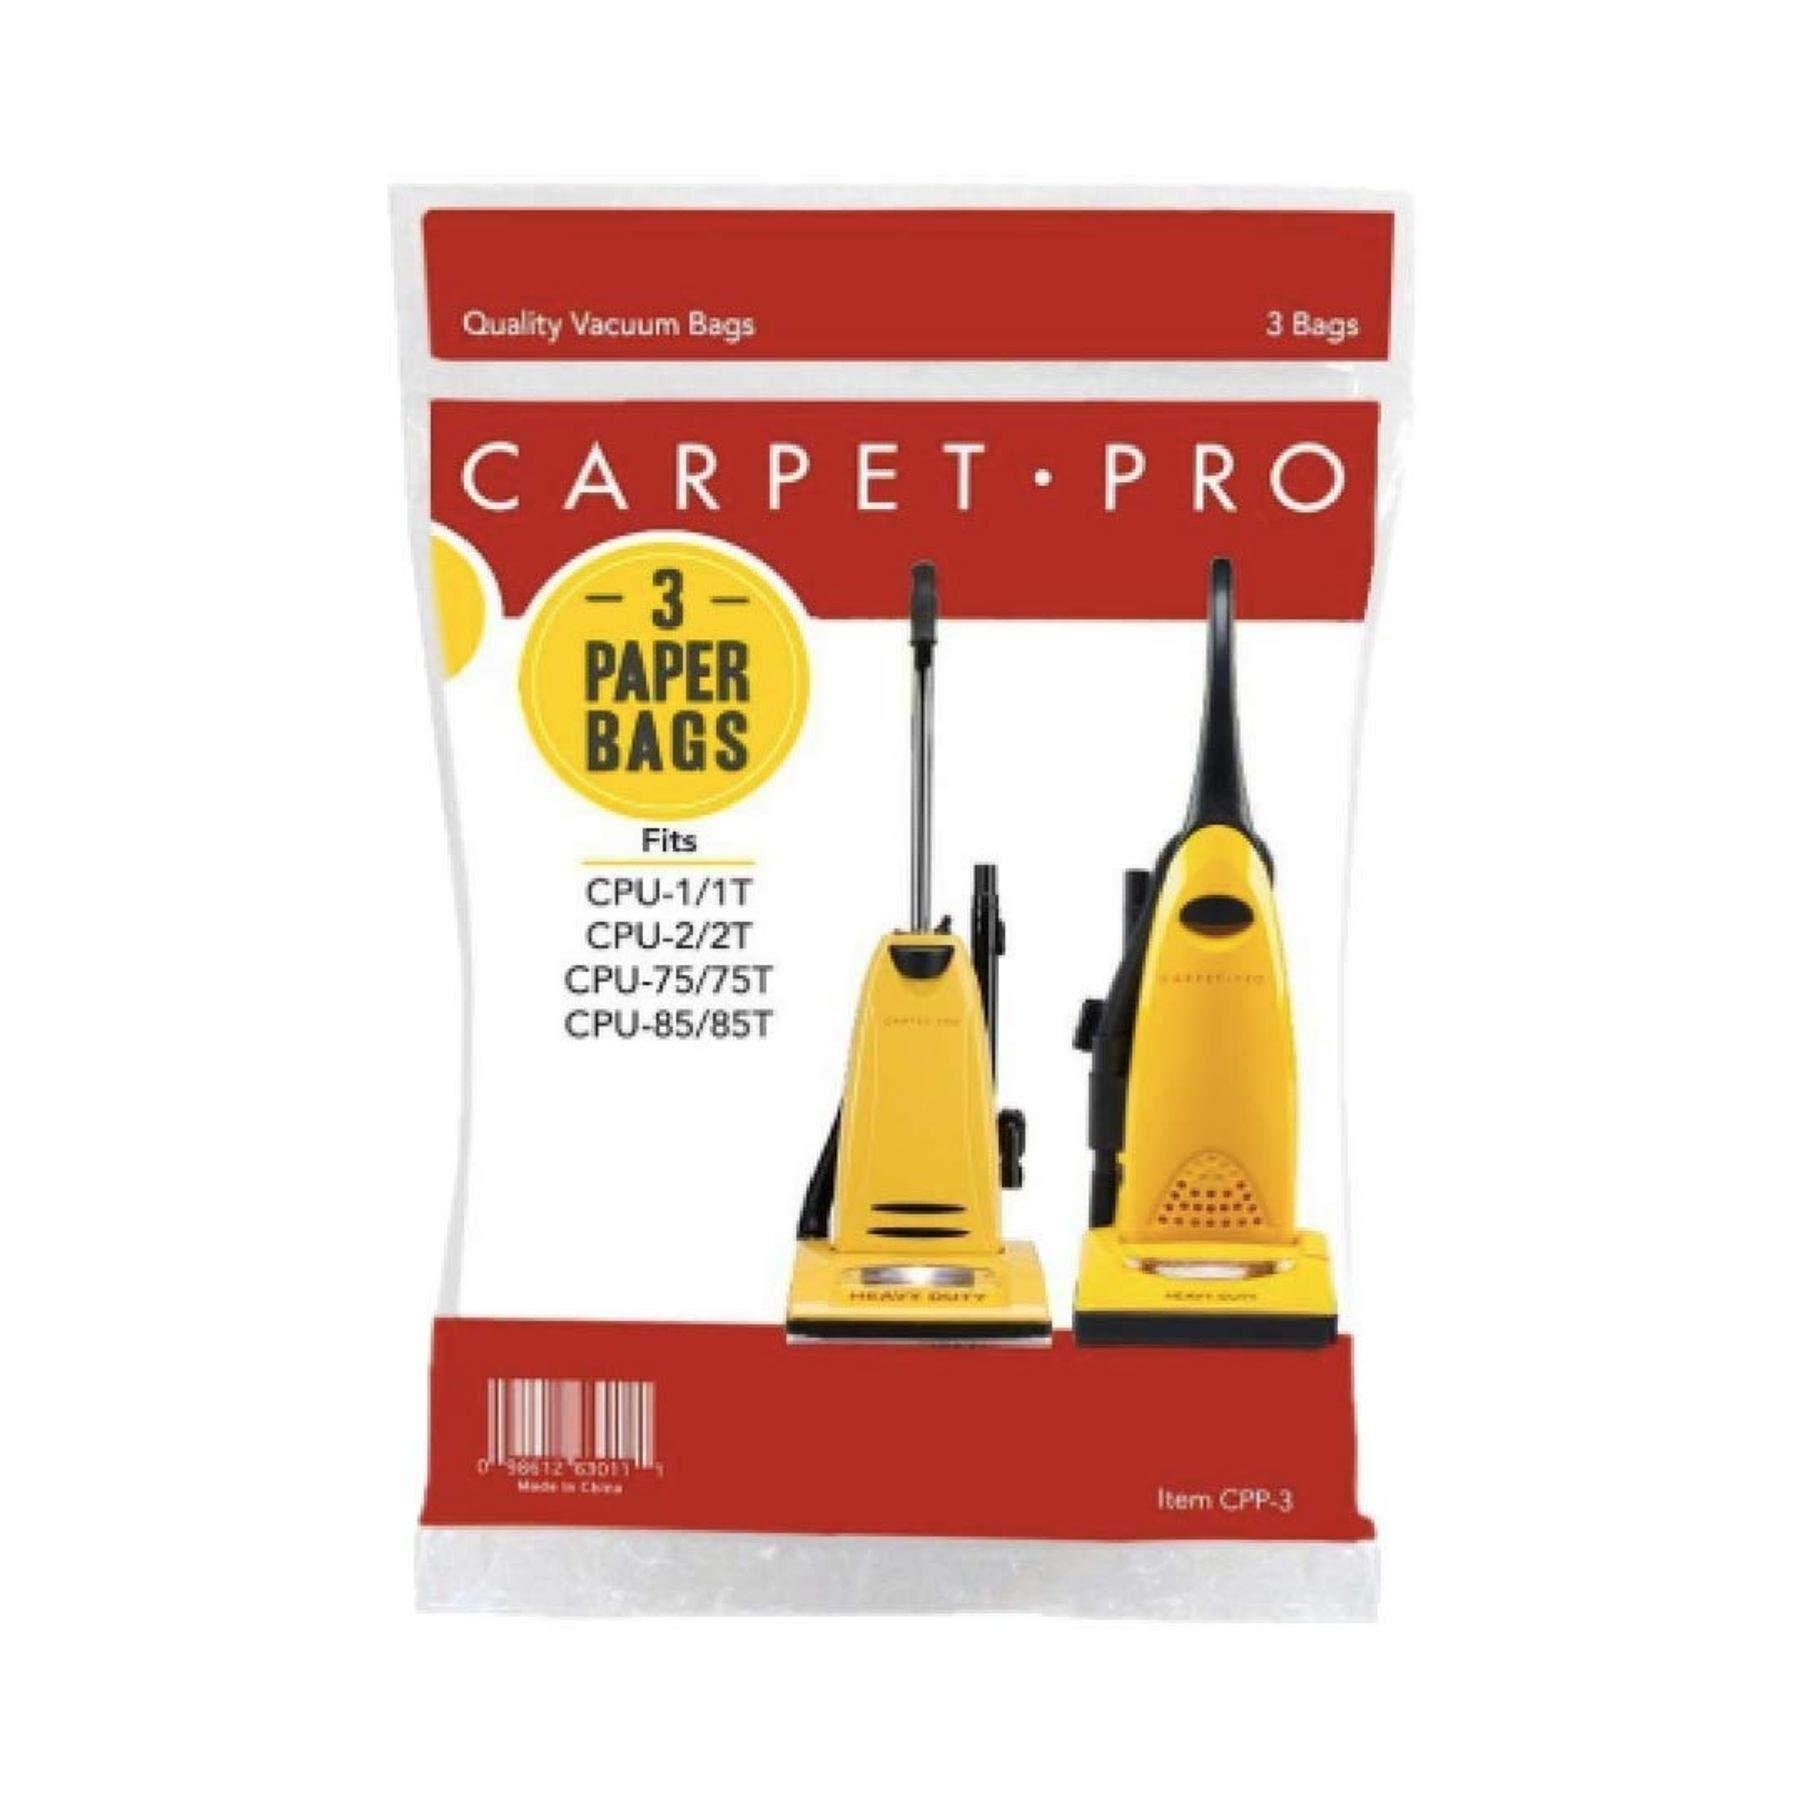 Carpet pro genuine carpet pro heavy duty & standard upright bags 3 pk # 06.153, cpp-3 by carpet pro